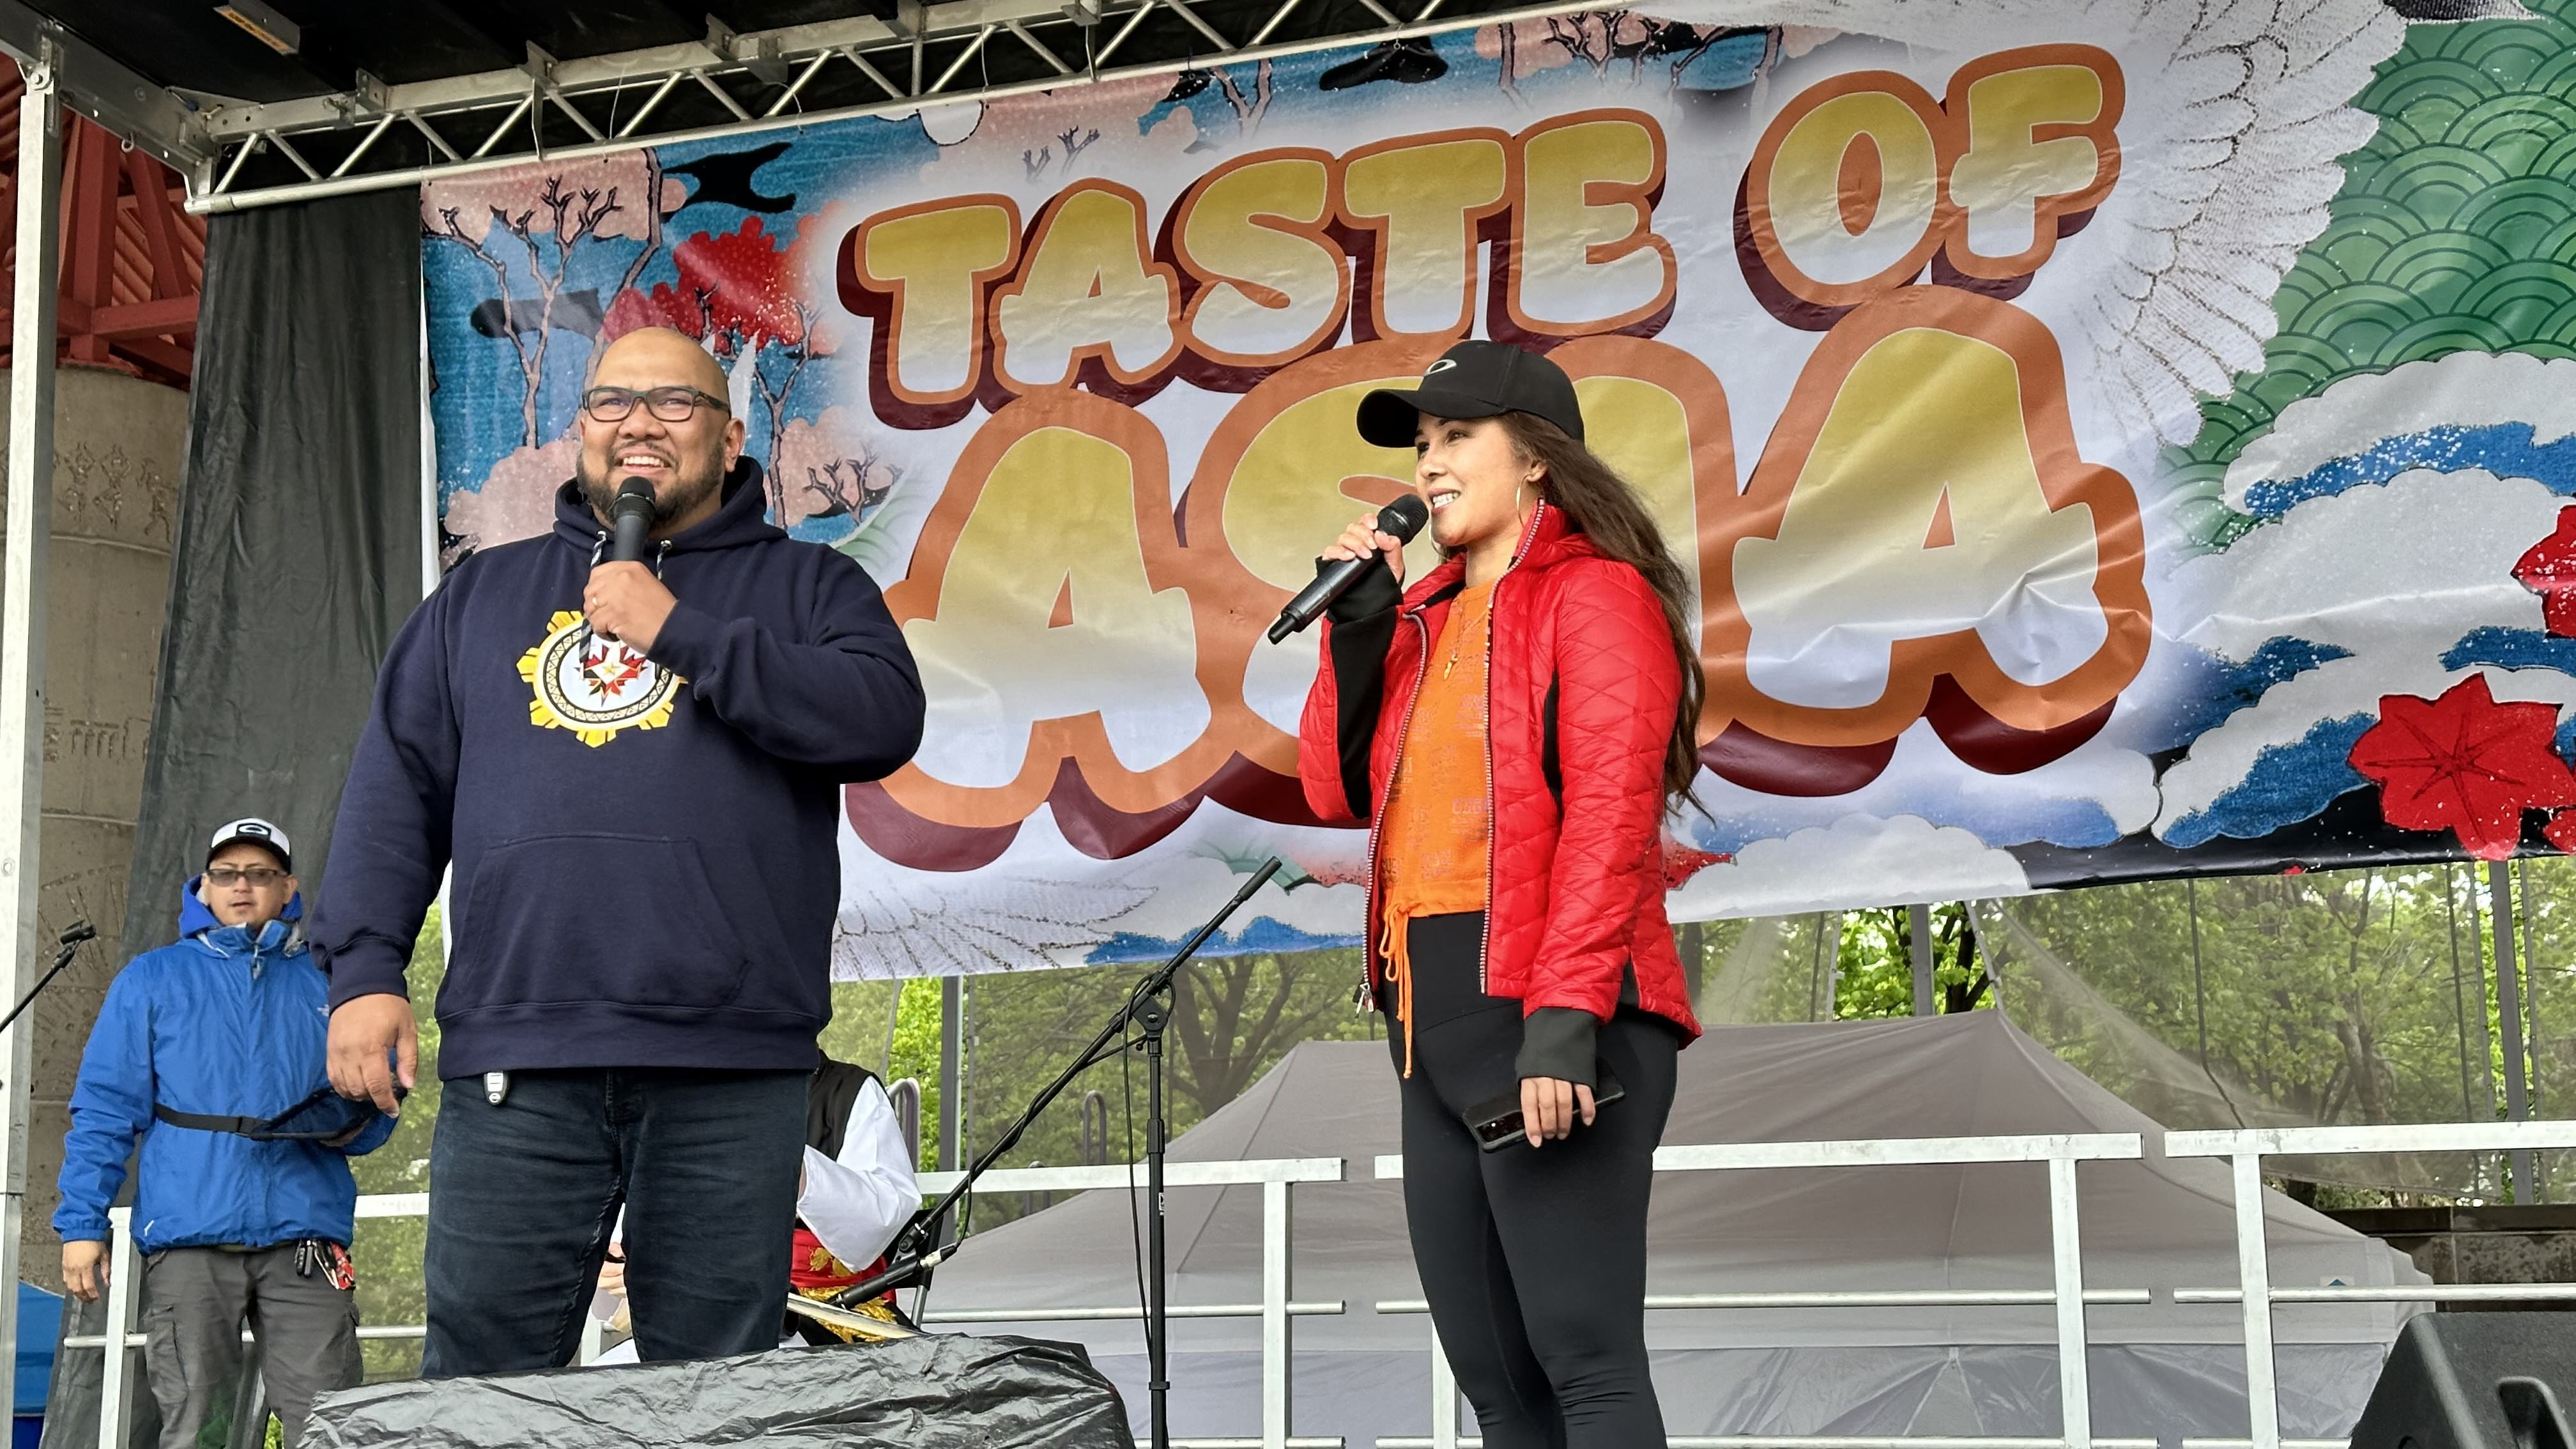 Taste of Asia festival in Winnipeg kicks off Saturday